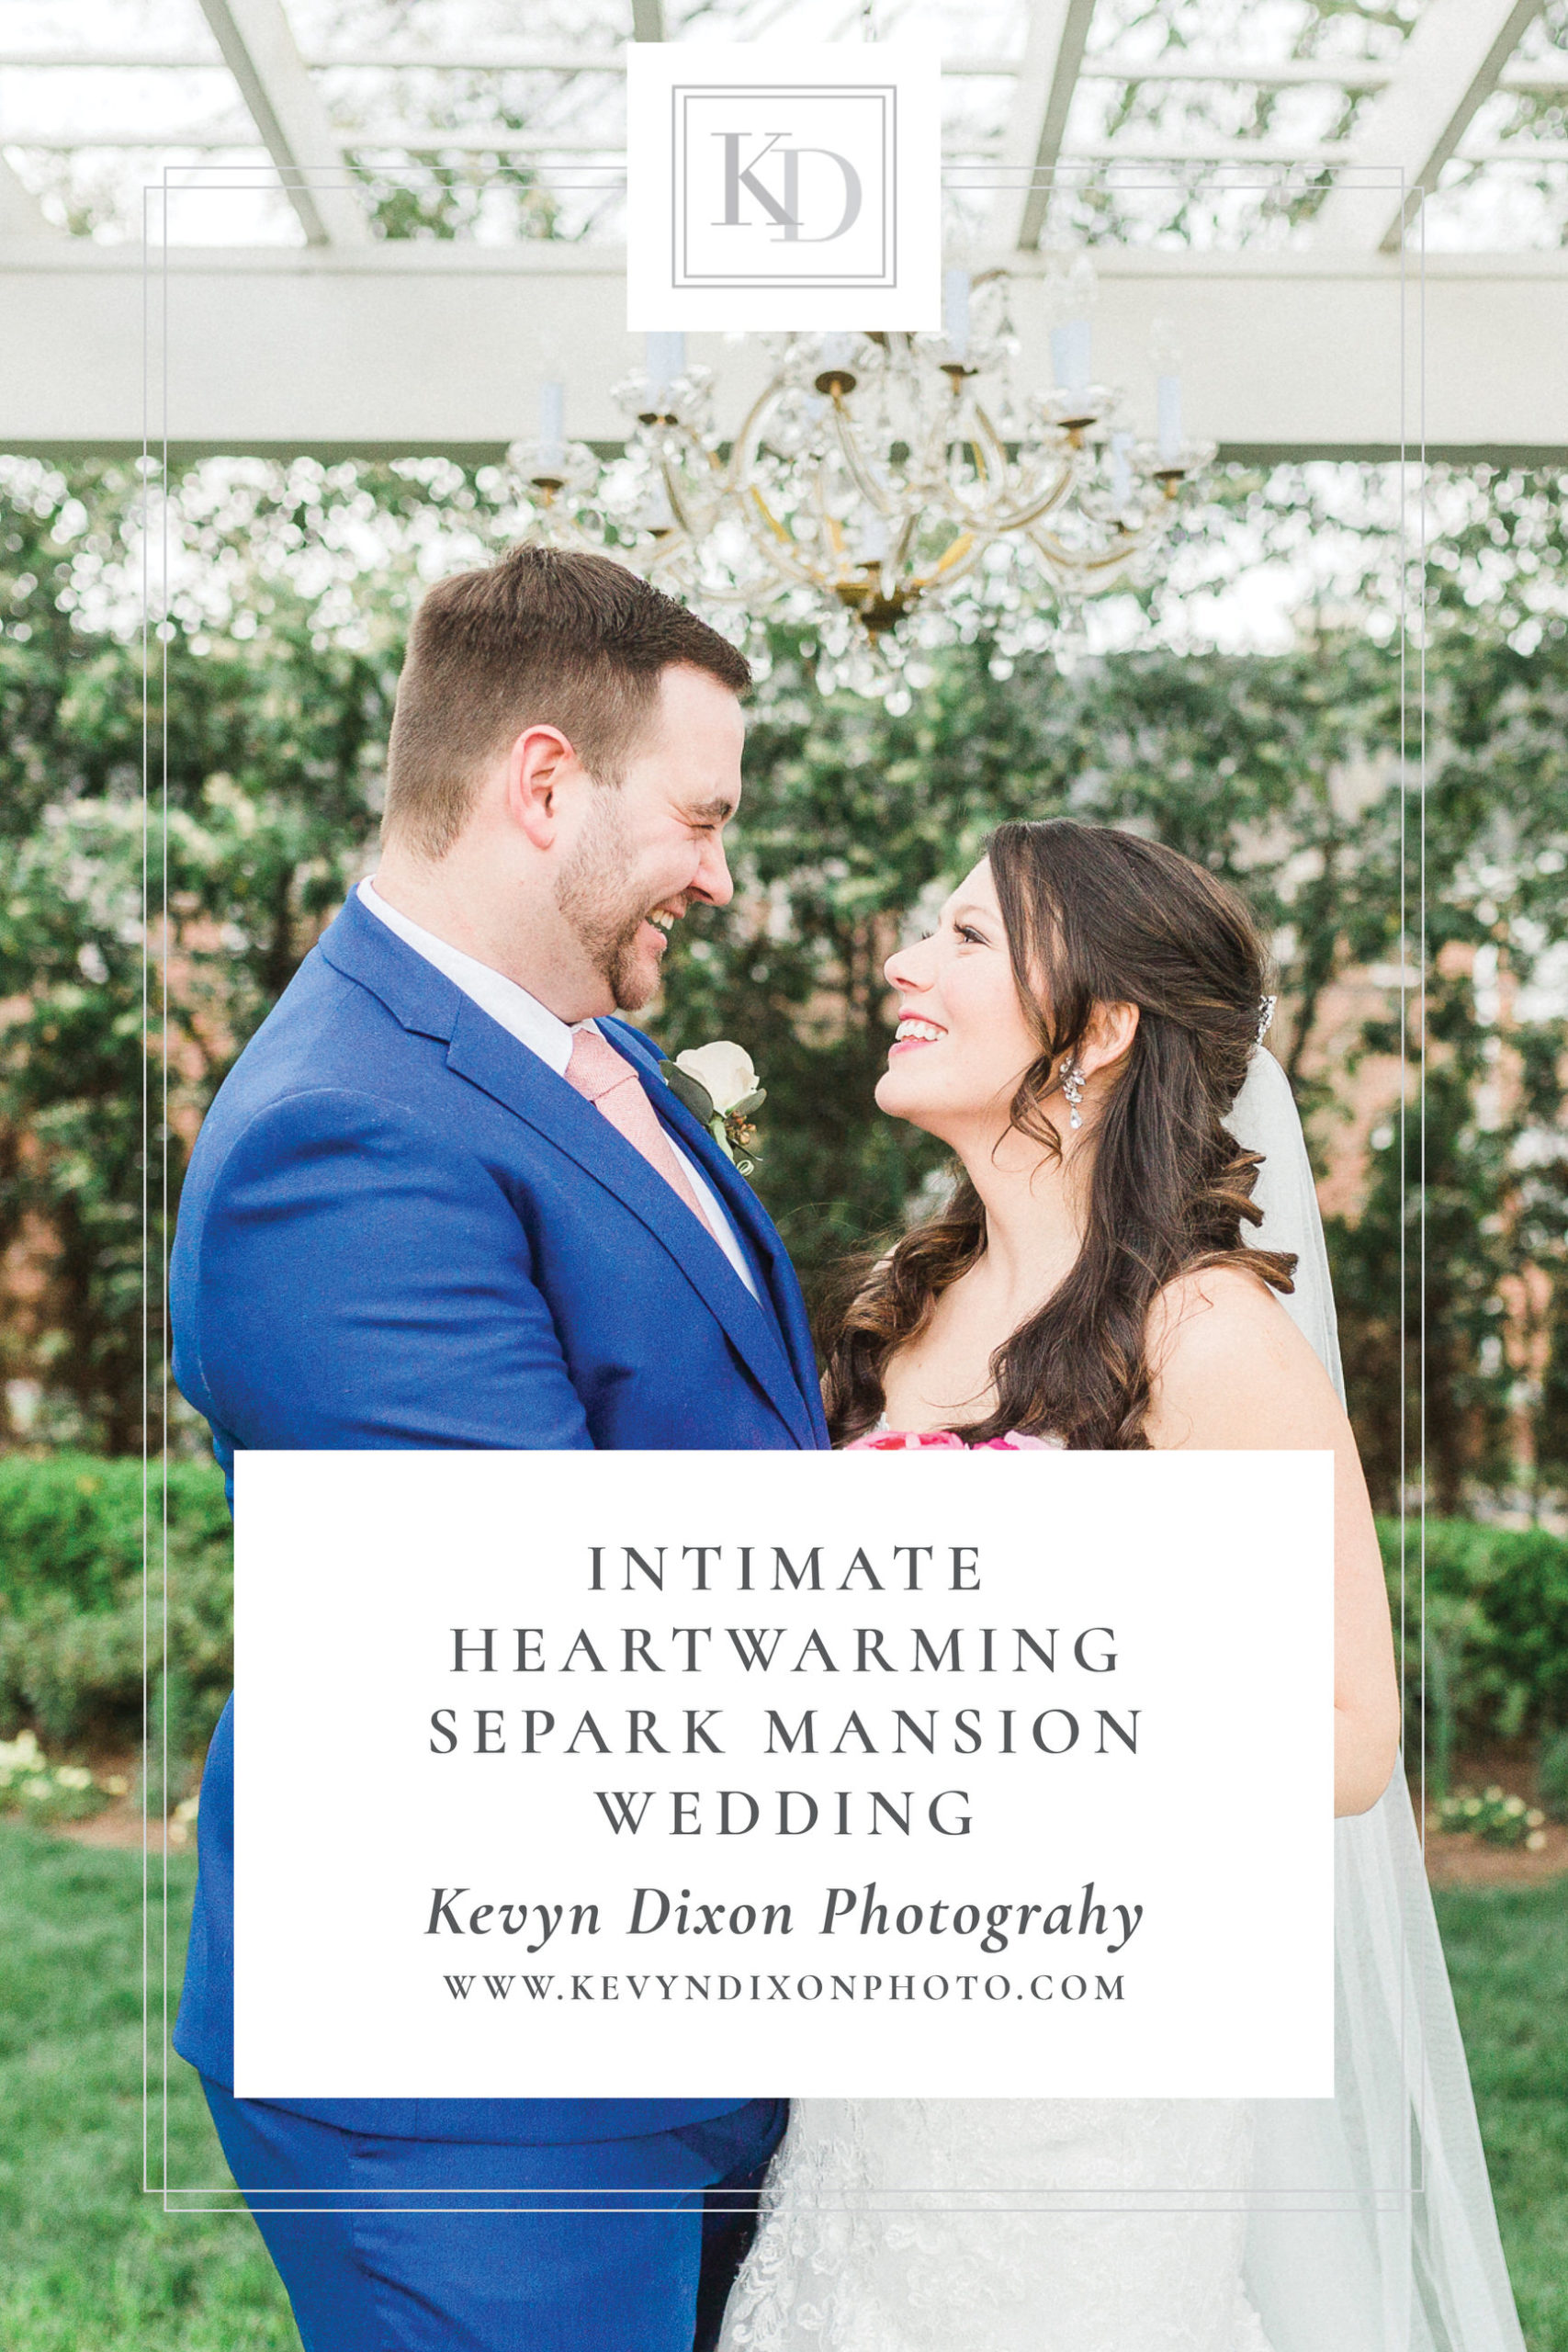 Intimate Heartwarming Separk Mansion Wedding pin image from Kevyn Dixon Photography Blog